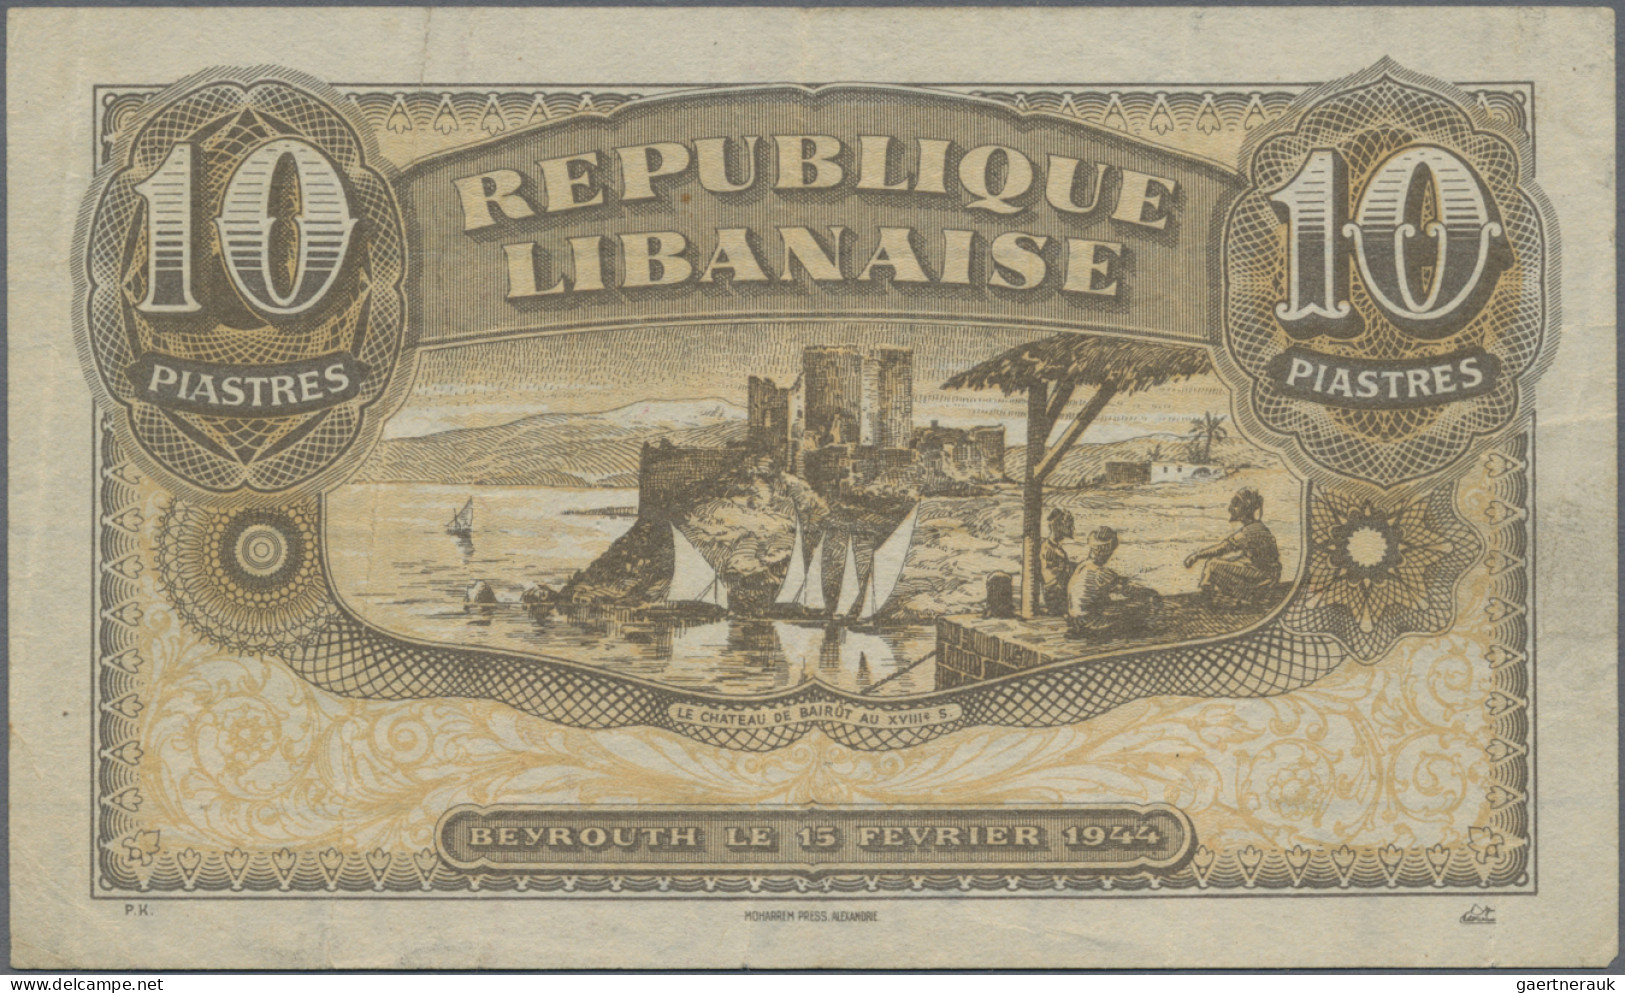 Lebanon: République Libanaise, set with 6 banknotes, 1944-1950 series, with 5 an